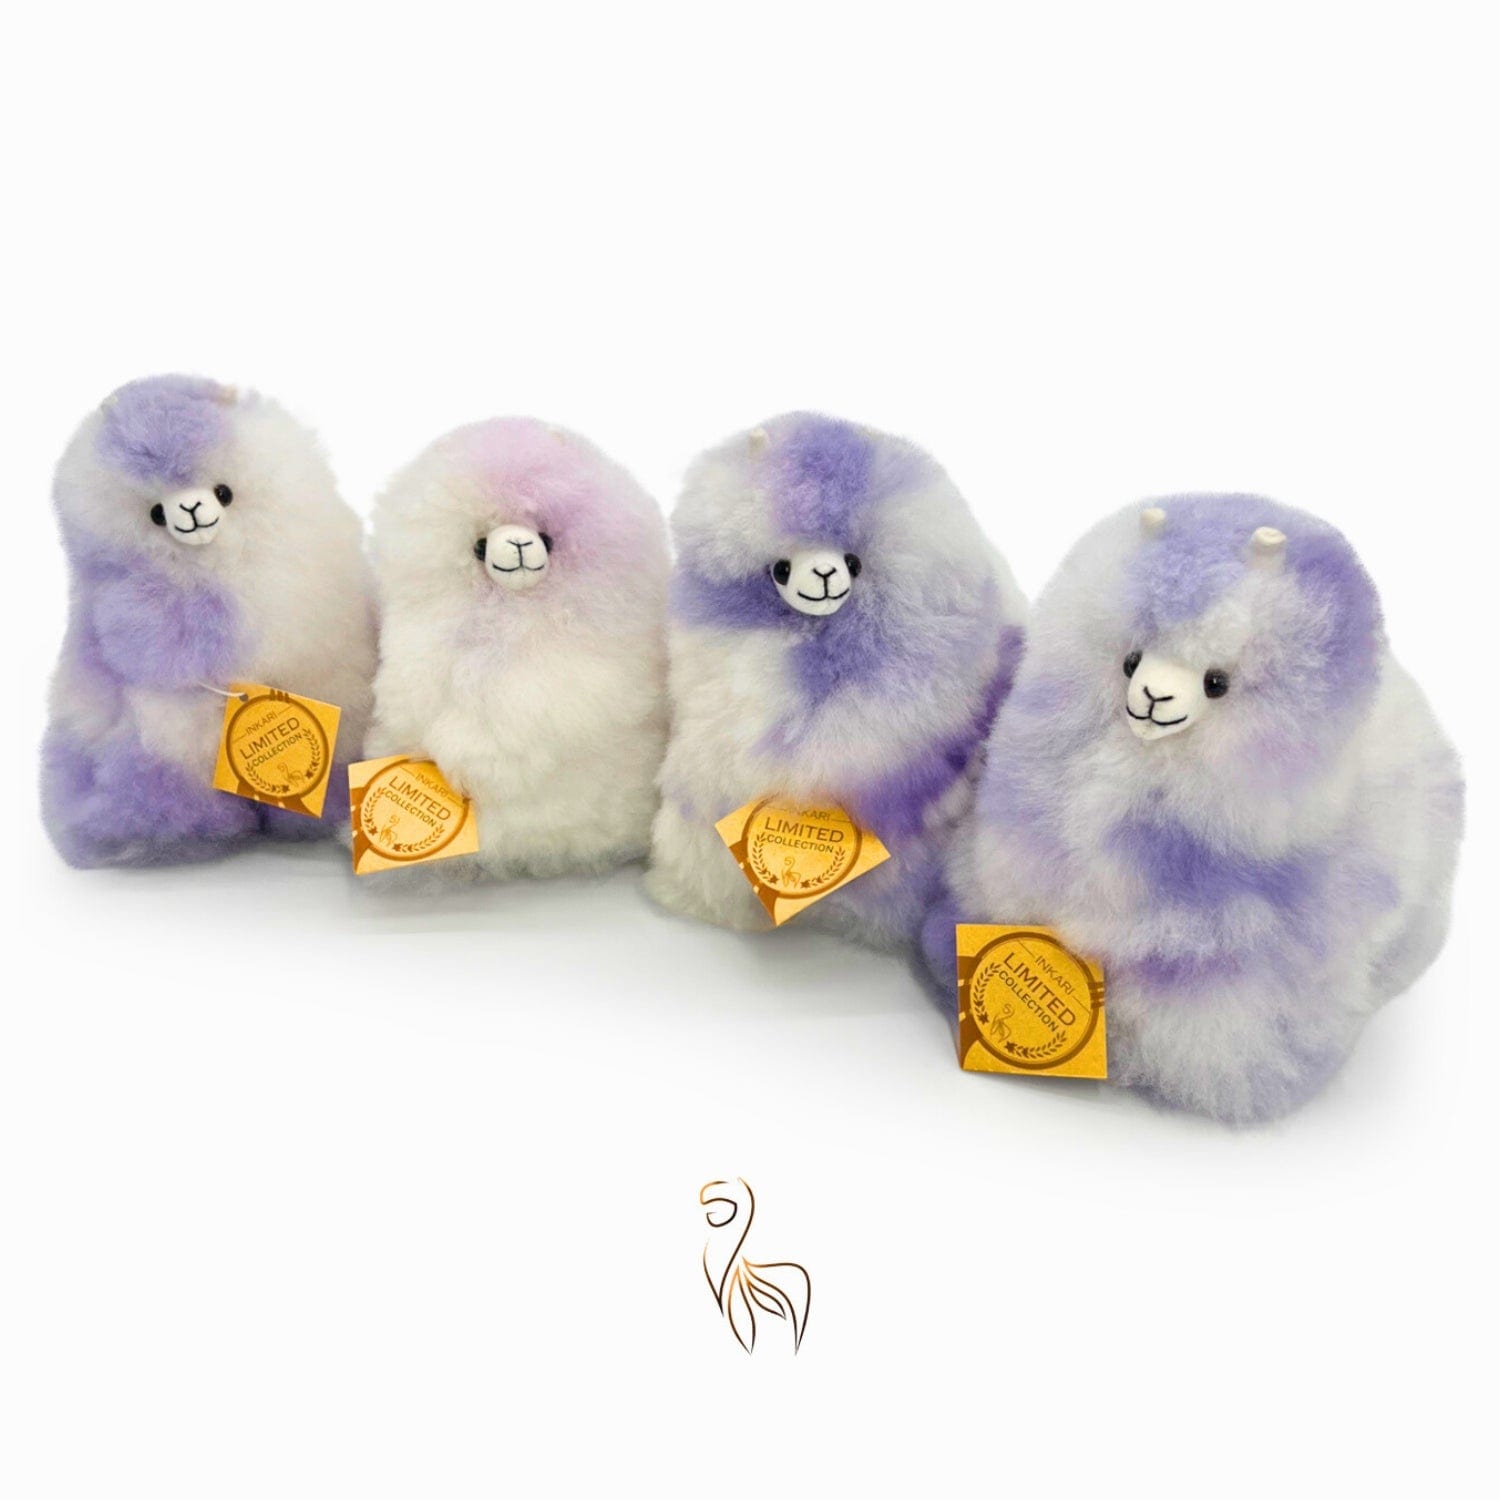 Lavender - Mini Alpaca Toy (15cm) - Limited Edition